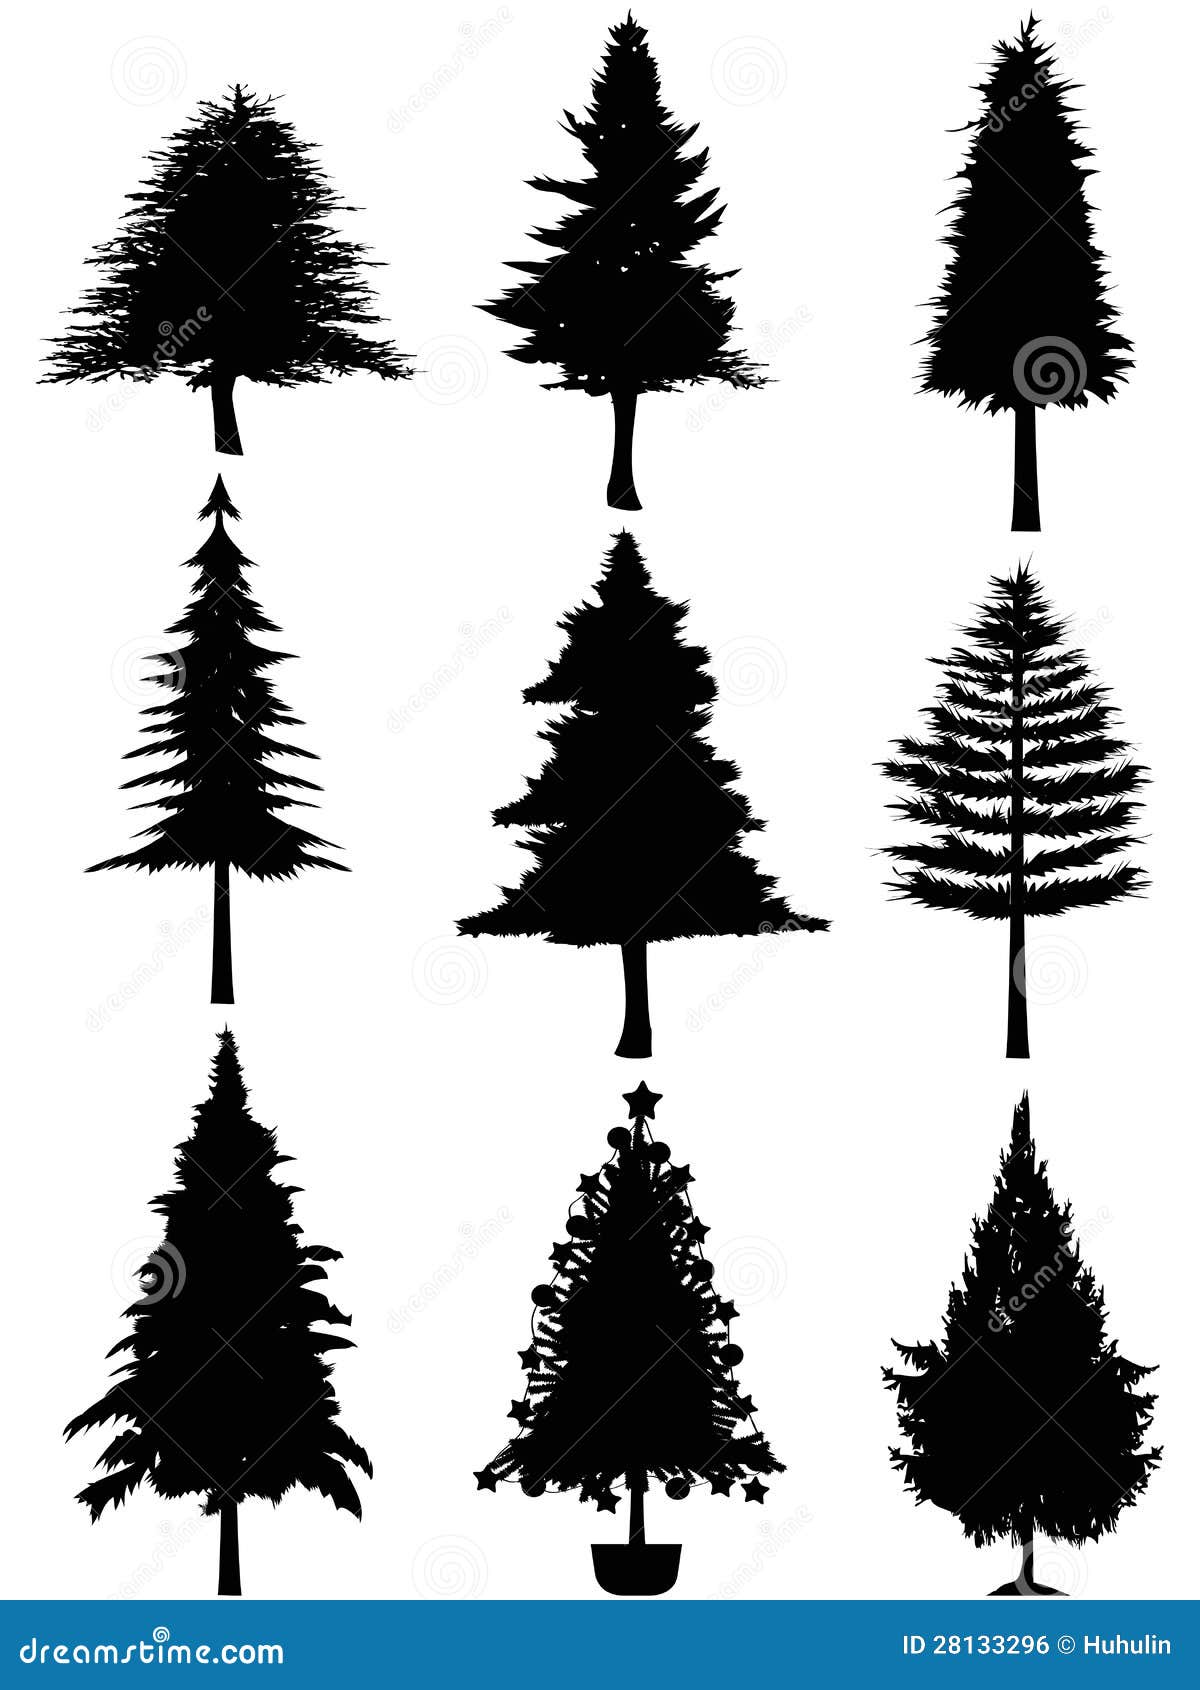 Christmas Tree Silhouette Royalty Free Stock Image - Image 